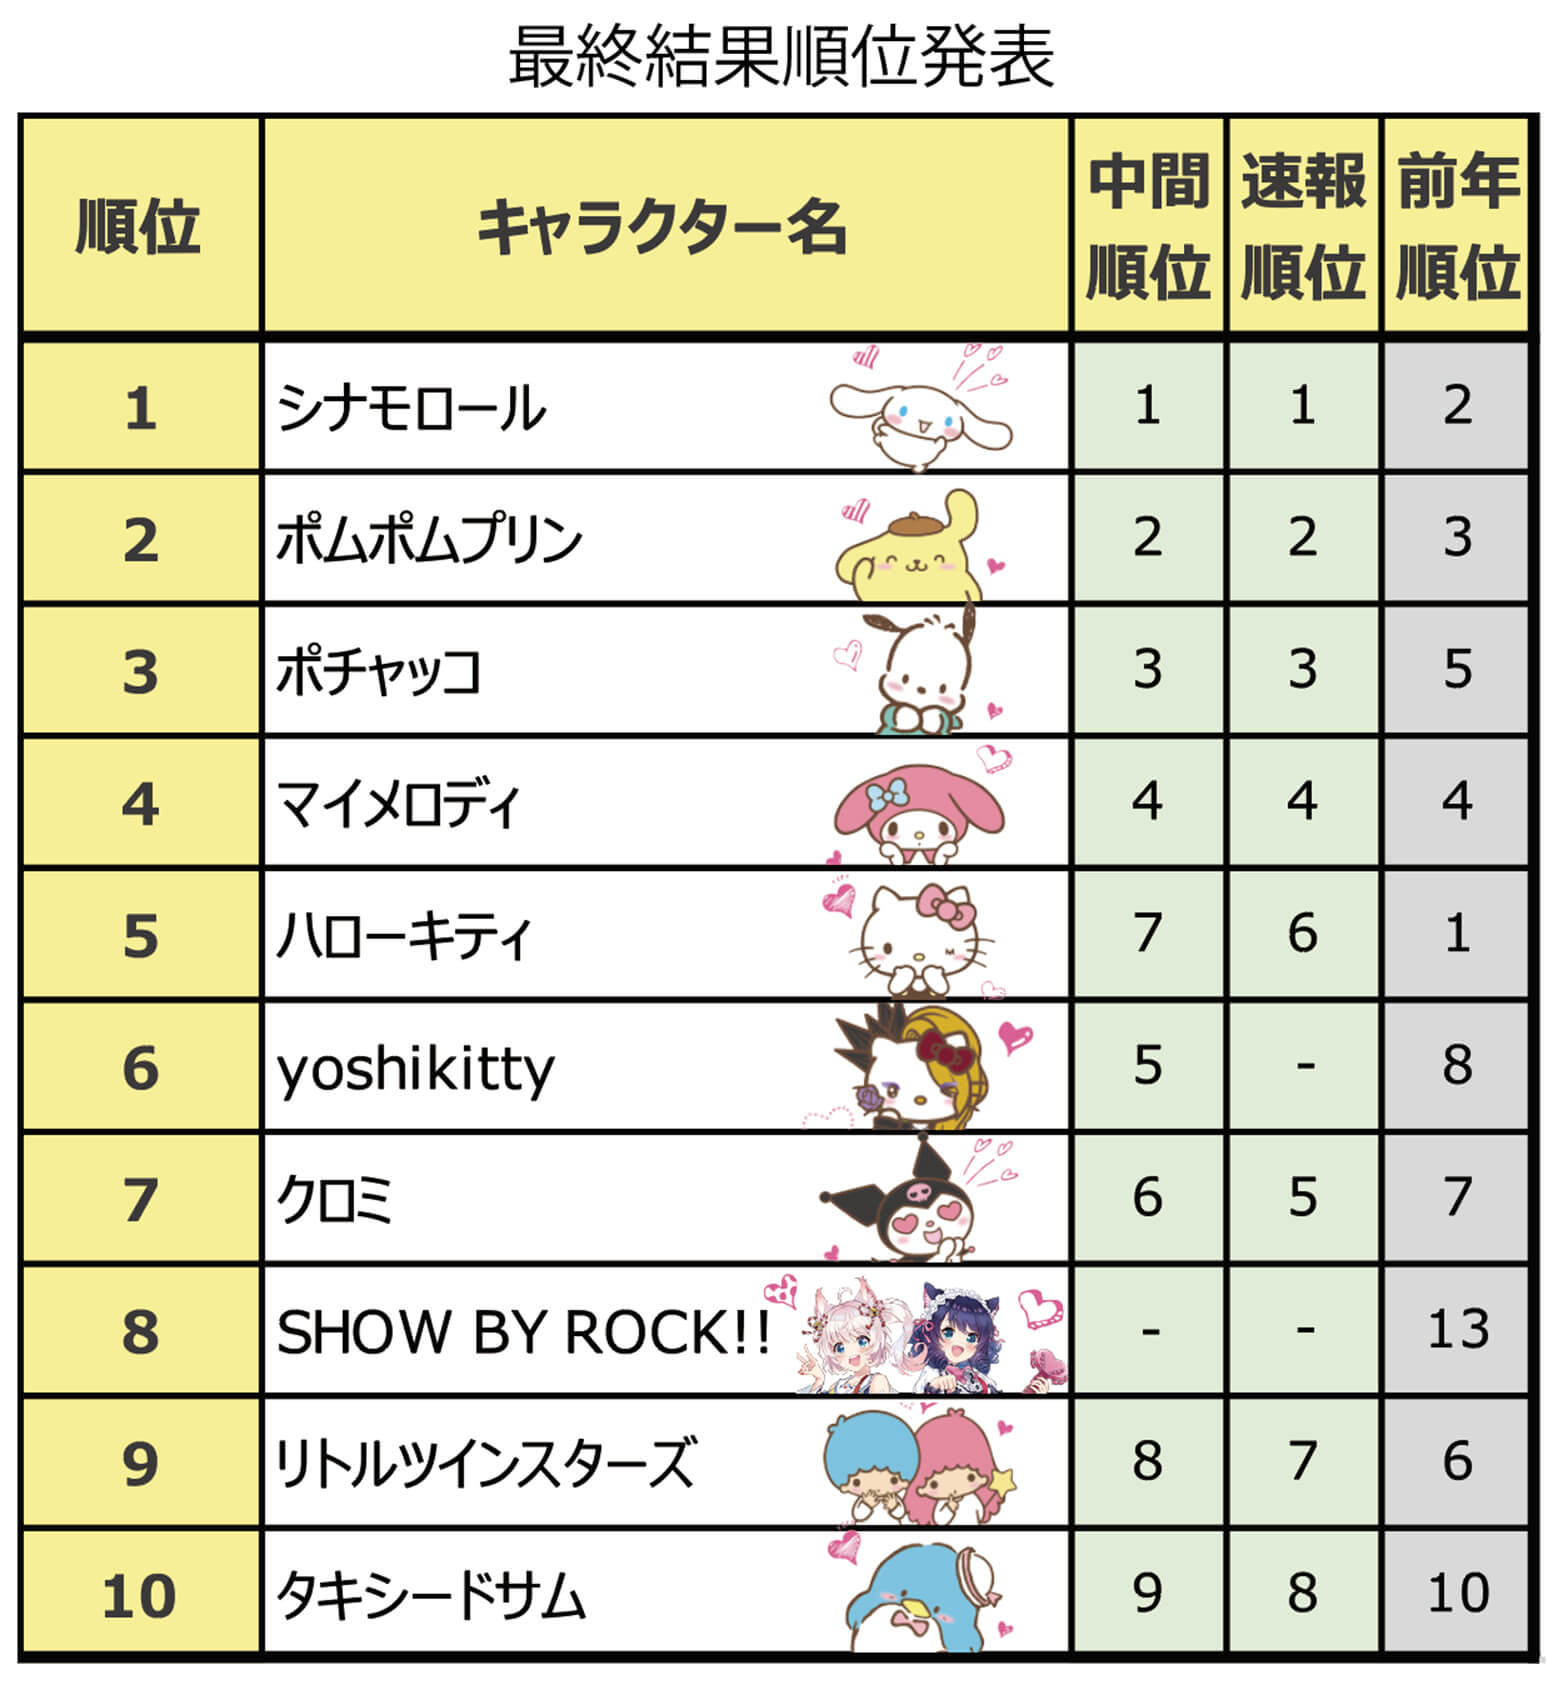 33rd Annual Sanrio Character Ranking